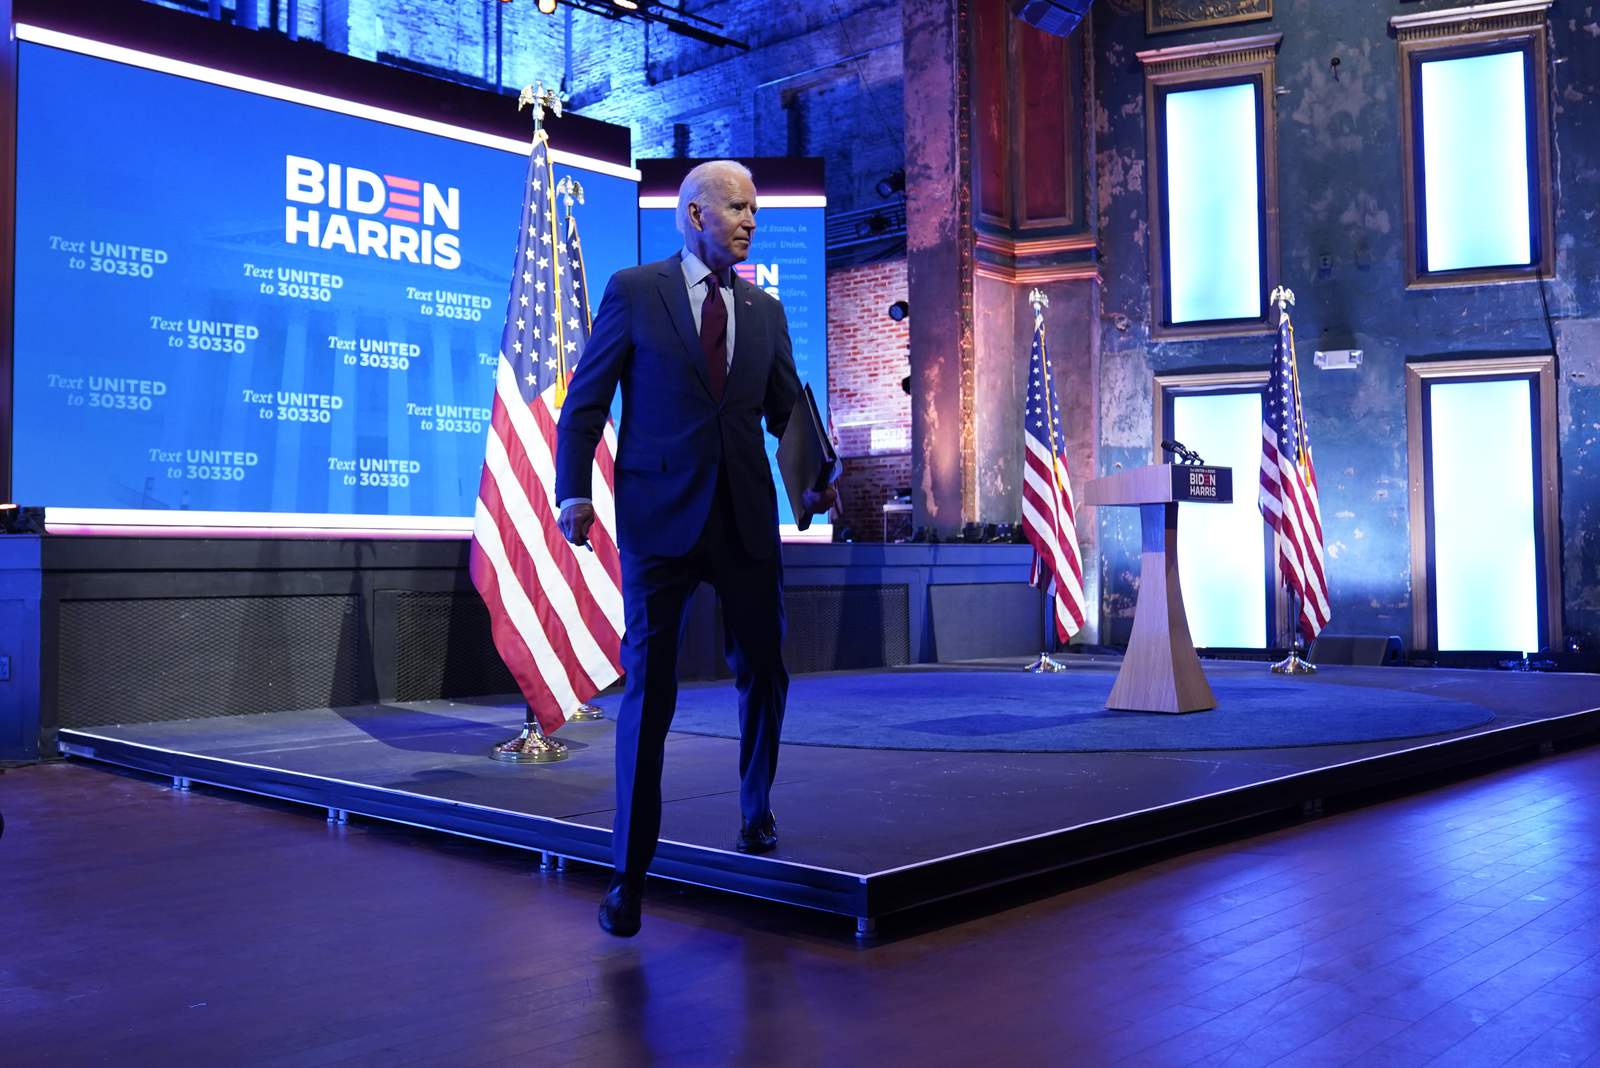 Biden releases 2019 taxes as pre-debate contrast with Trump